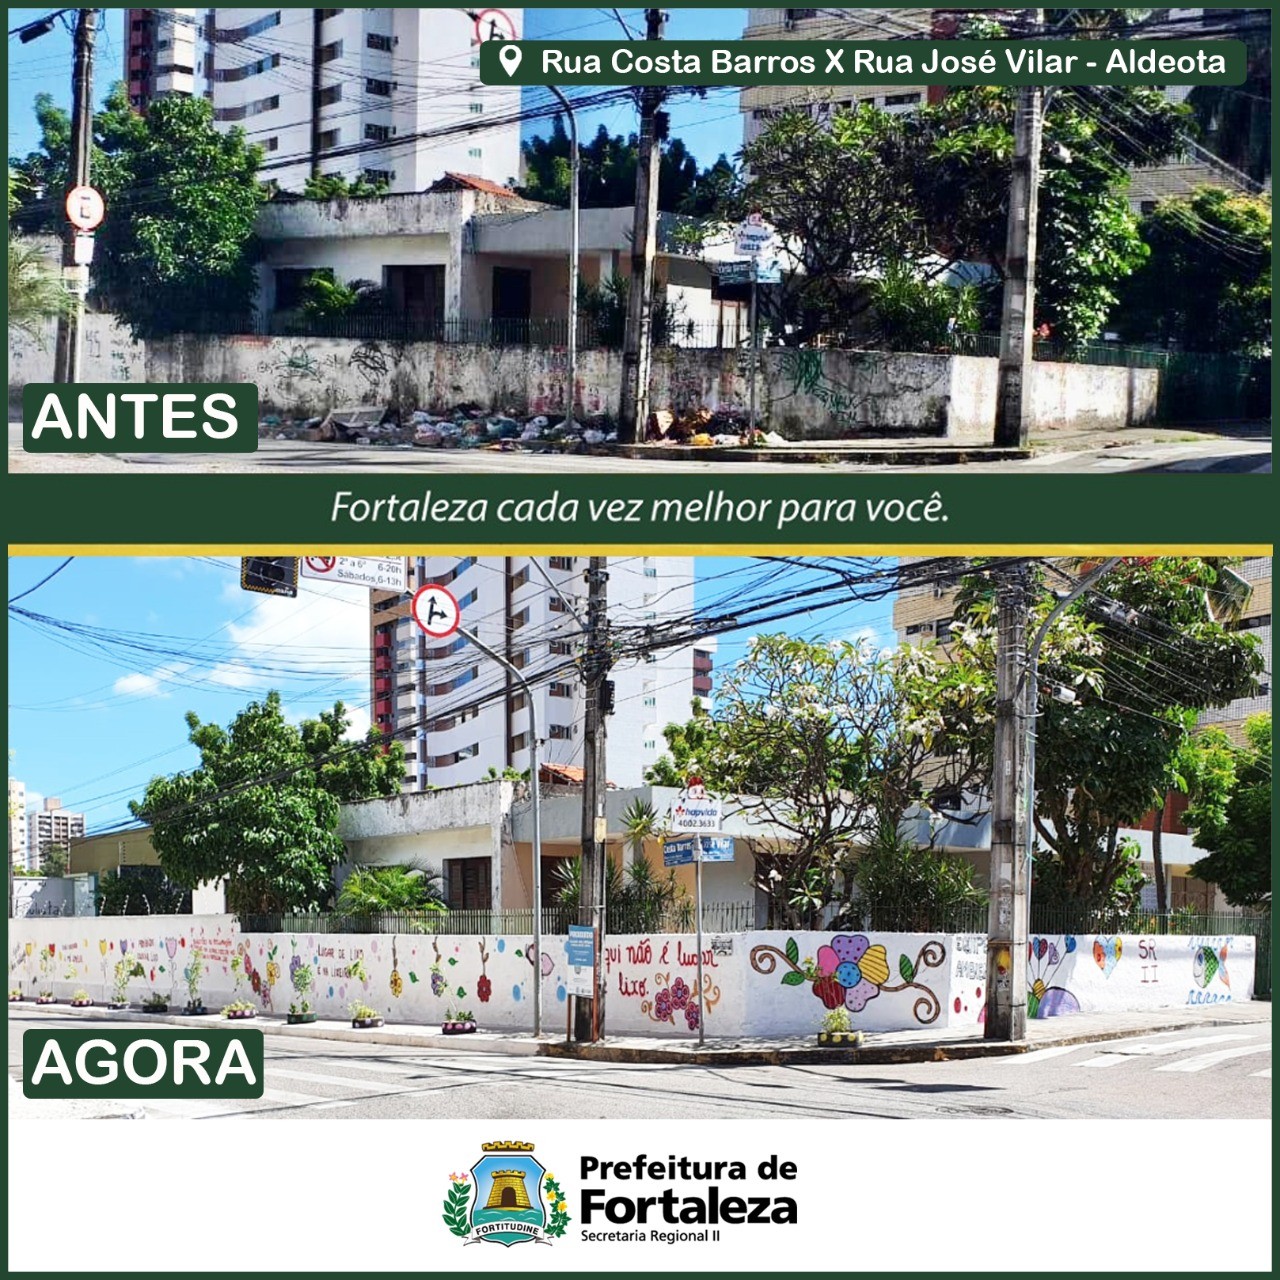 Fóruns Territoriais de Fortaleza - Fórun Territorial Aldeota, Meireles - Prefeitura de Fortaleza elimina ponto de lixo crônico e requalifica passeio na Aldeota